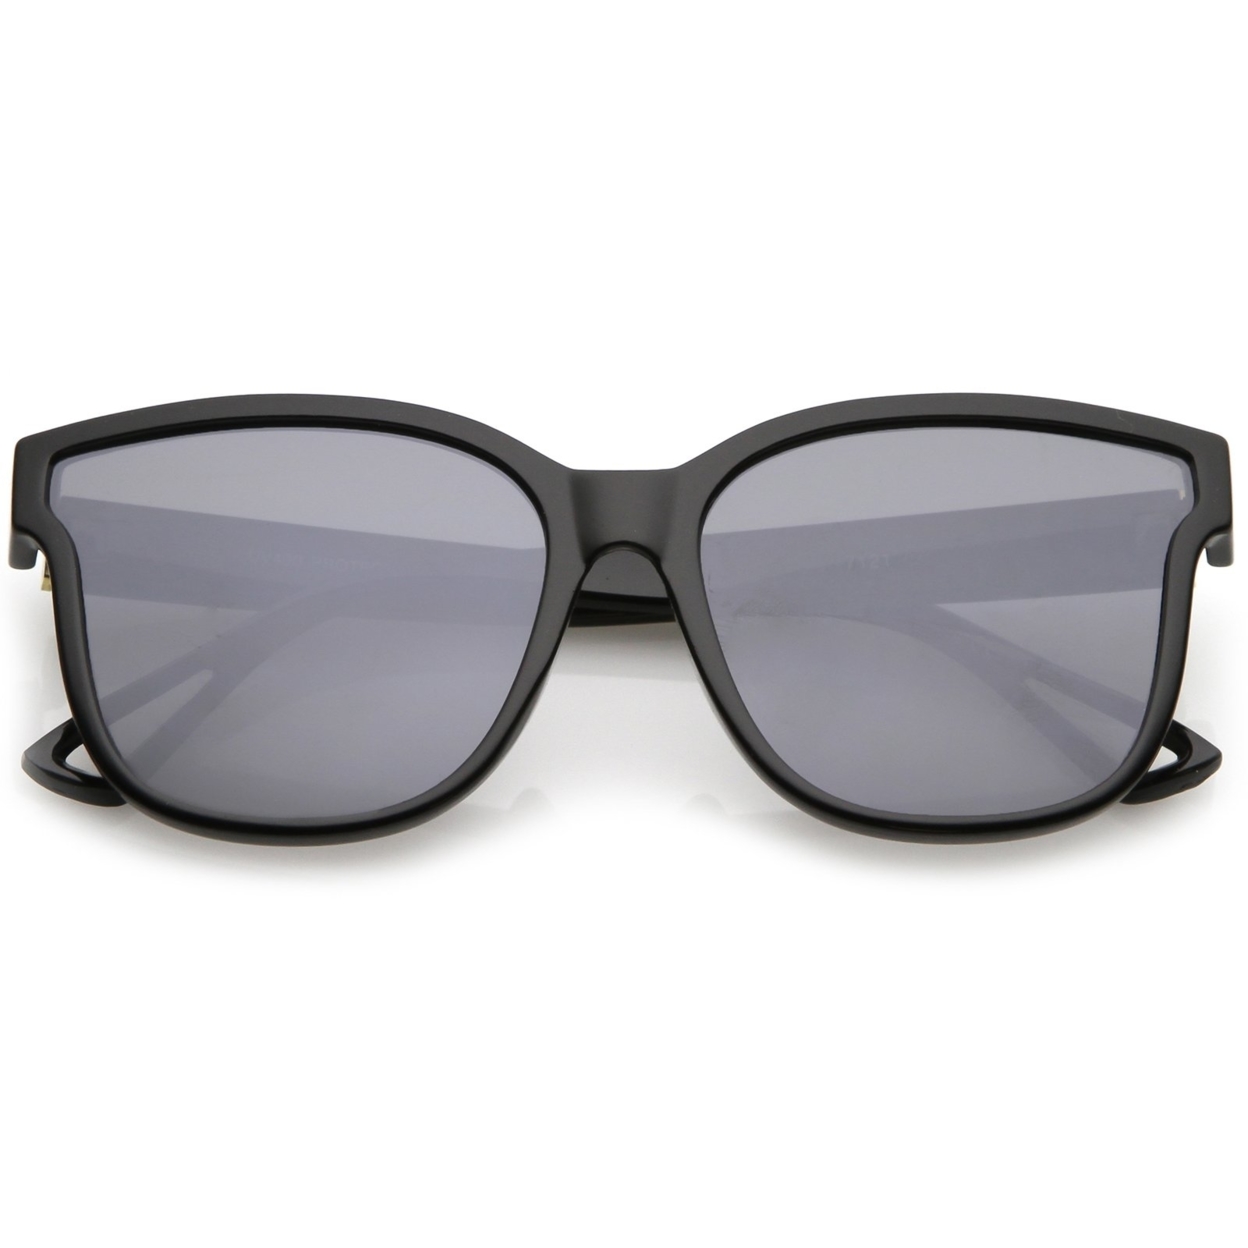 Women's Horn Rim Metal Accent Square Flat Lens Cat Eye Sunglasses 55mm - Shiny Black / Smoke